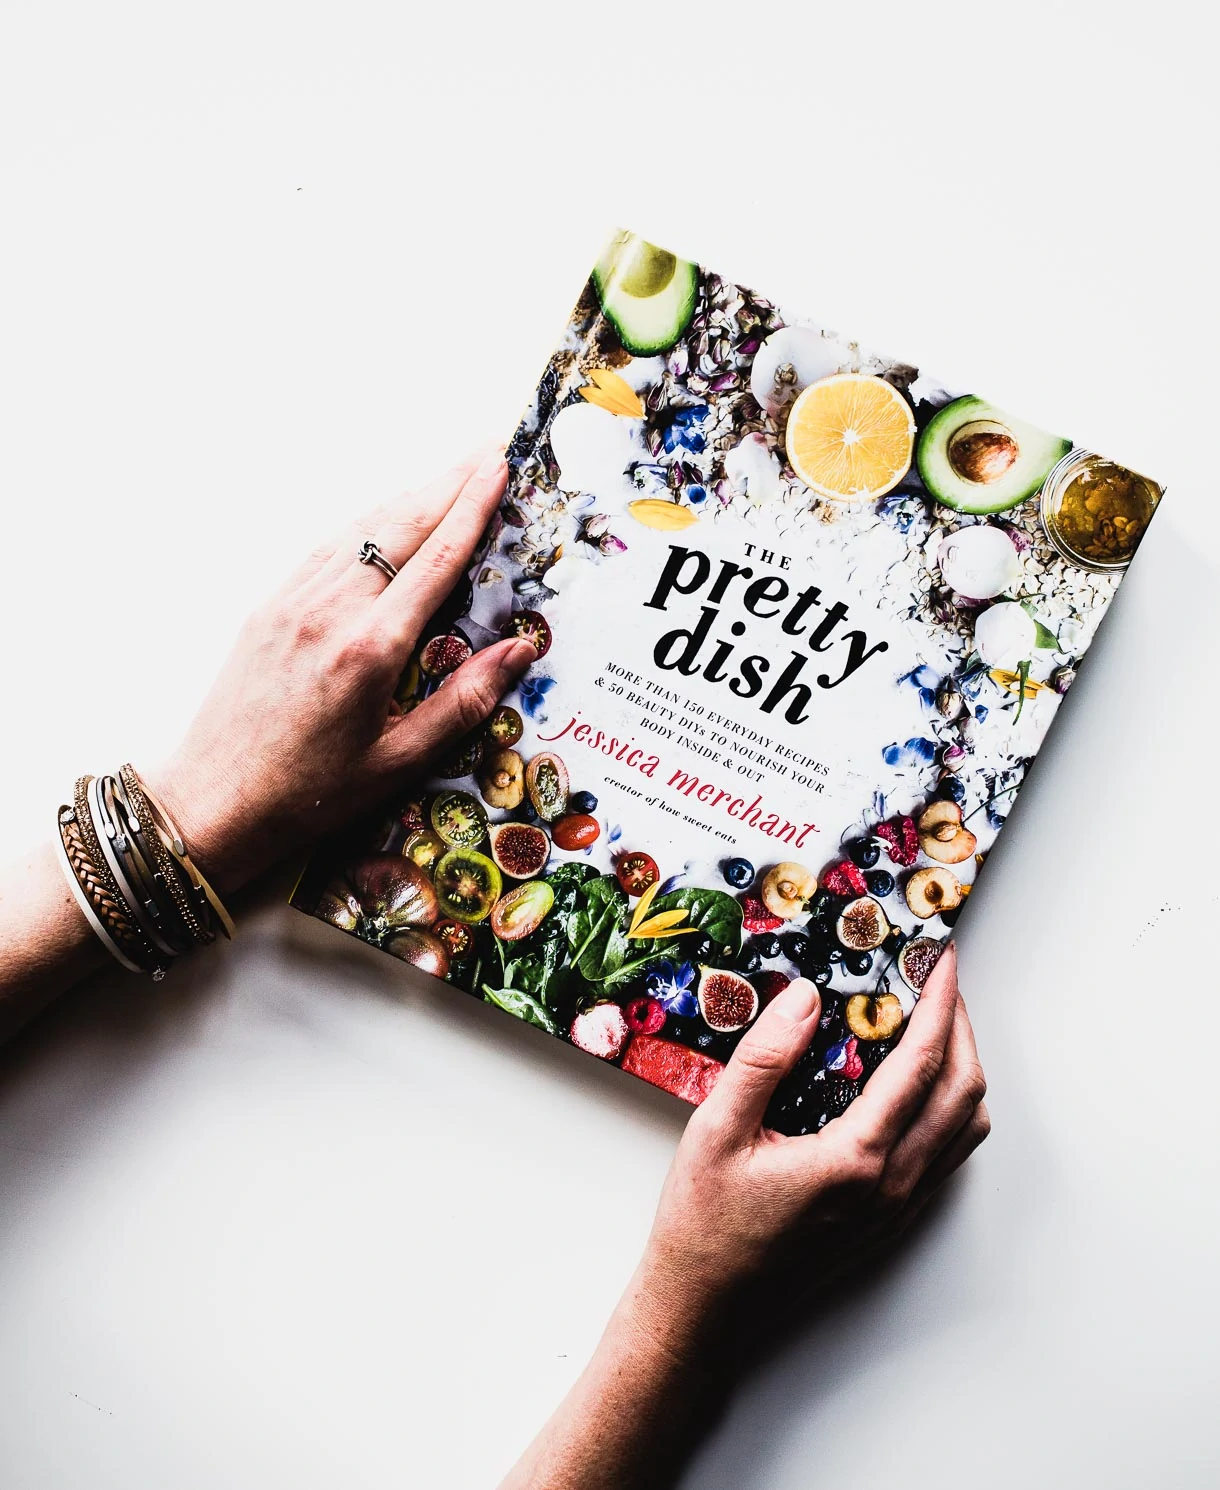 The Pretty Dish cookbook by Jessica Merchant